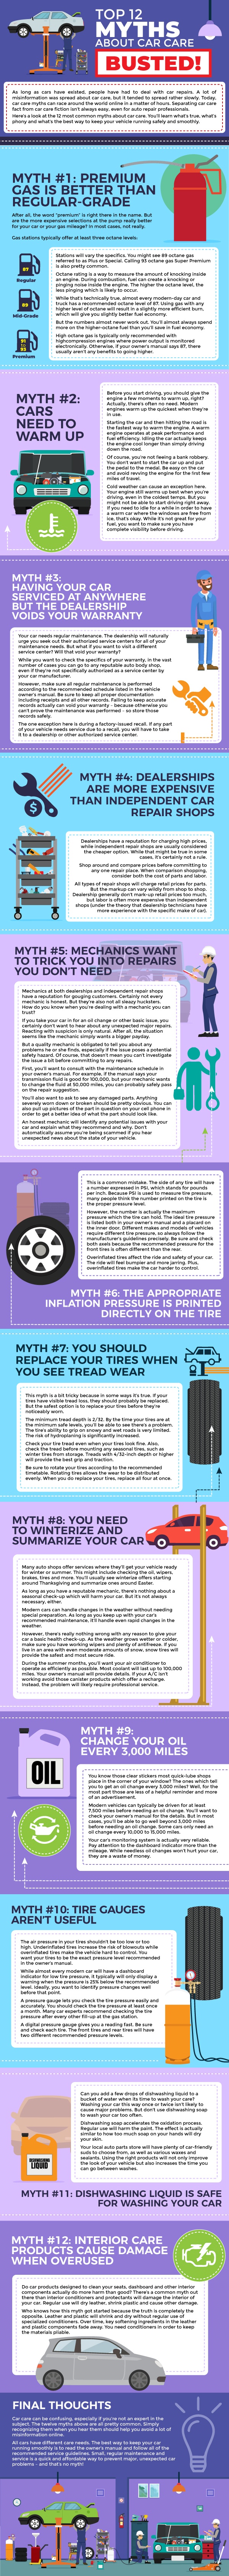 Car Care Myths - Infographic